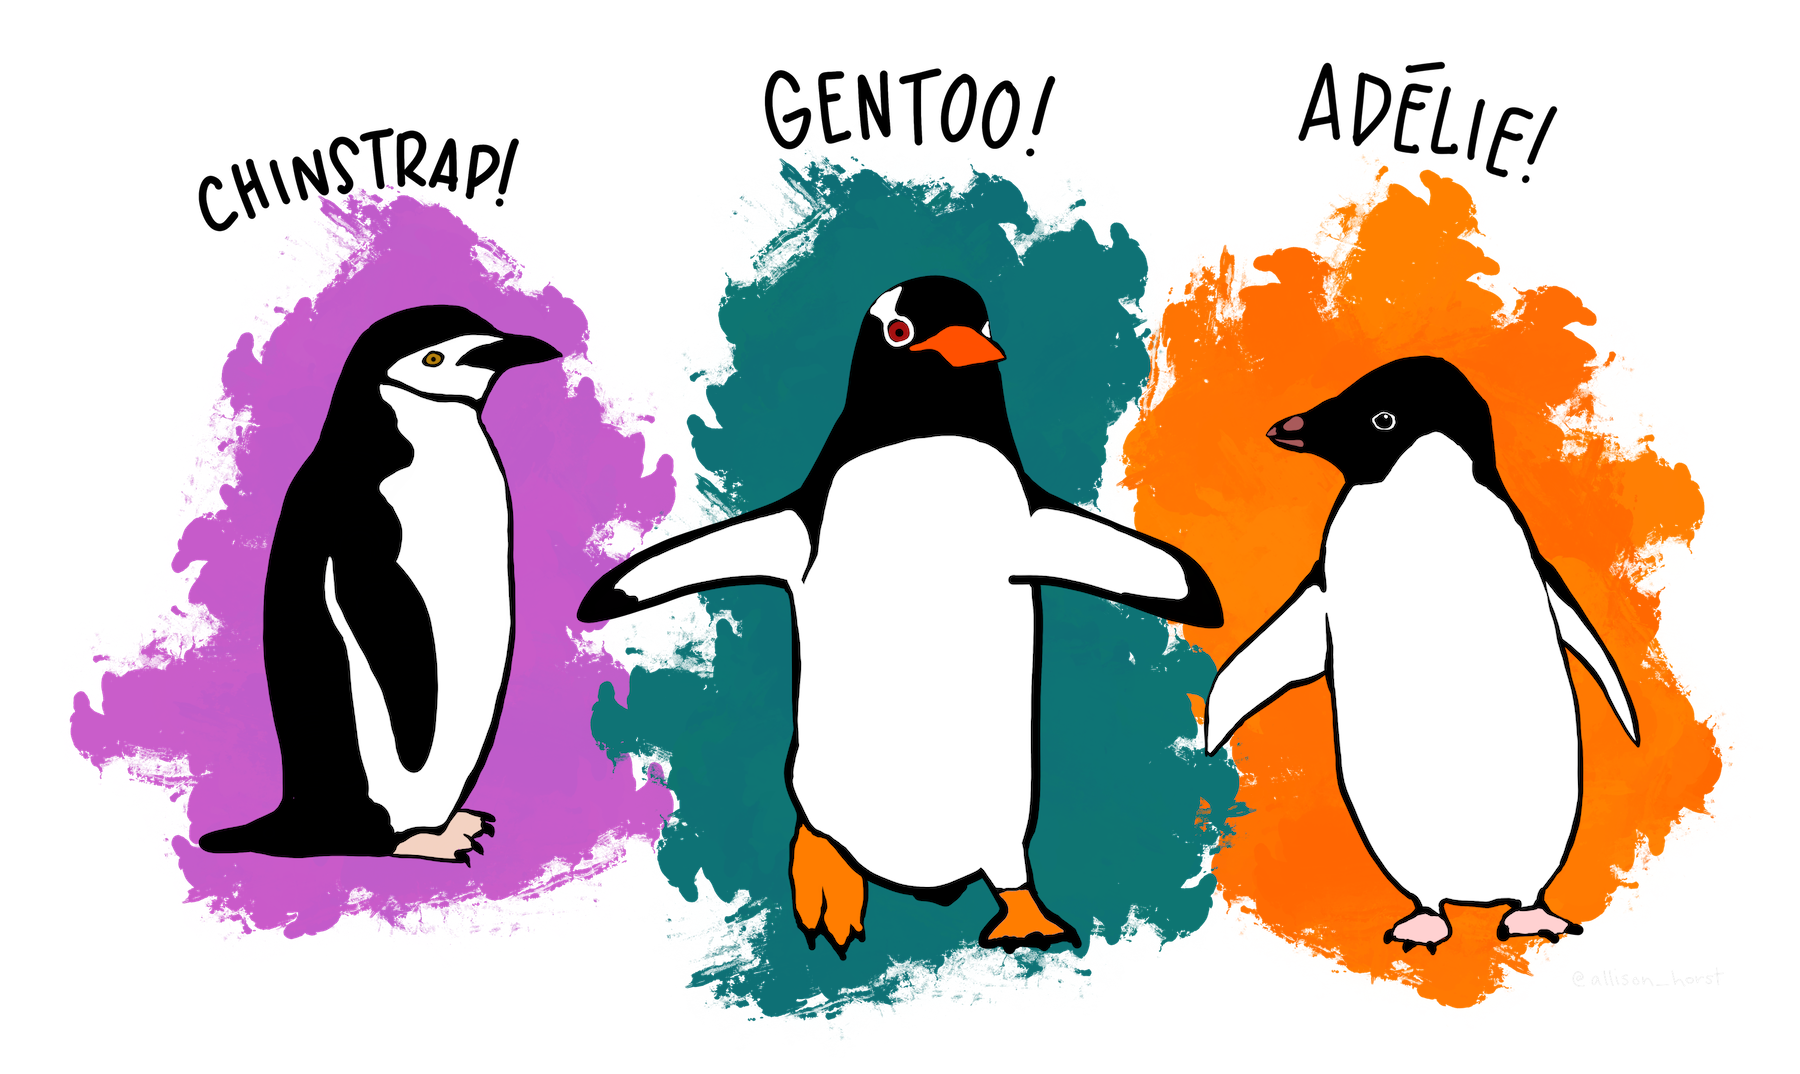 Conheça os Pinguins do dataset PalmerPenguins! Ilustração por <a href='https://github.com/allisonhorst/stats-illustrations'>Allison Horst</a>.